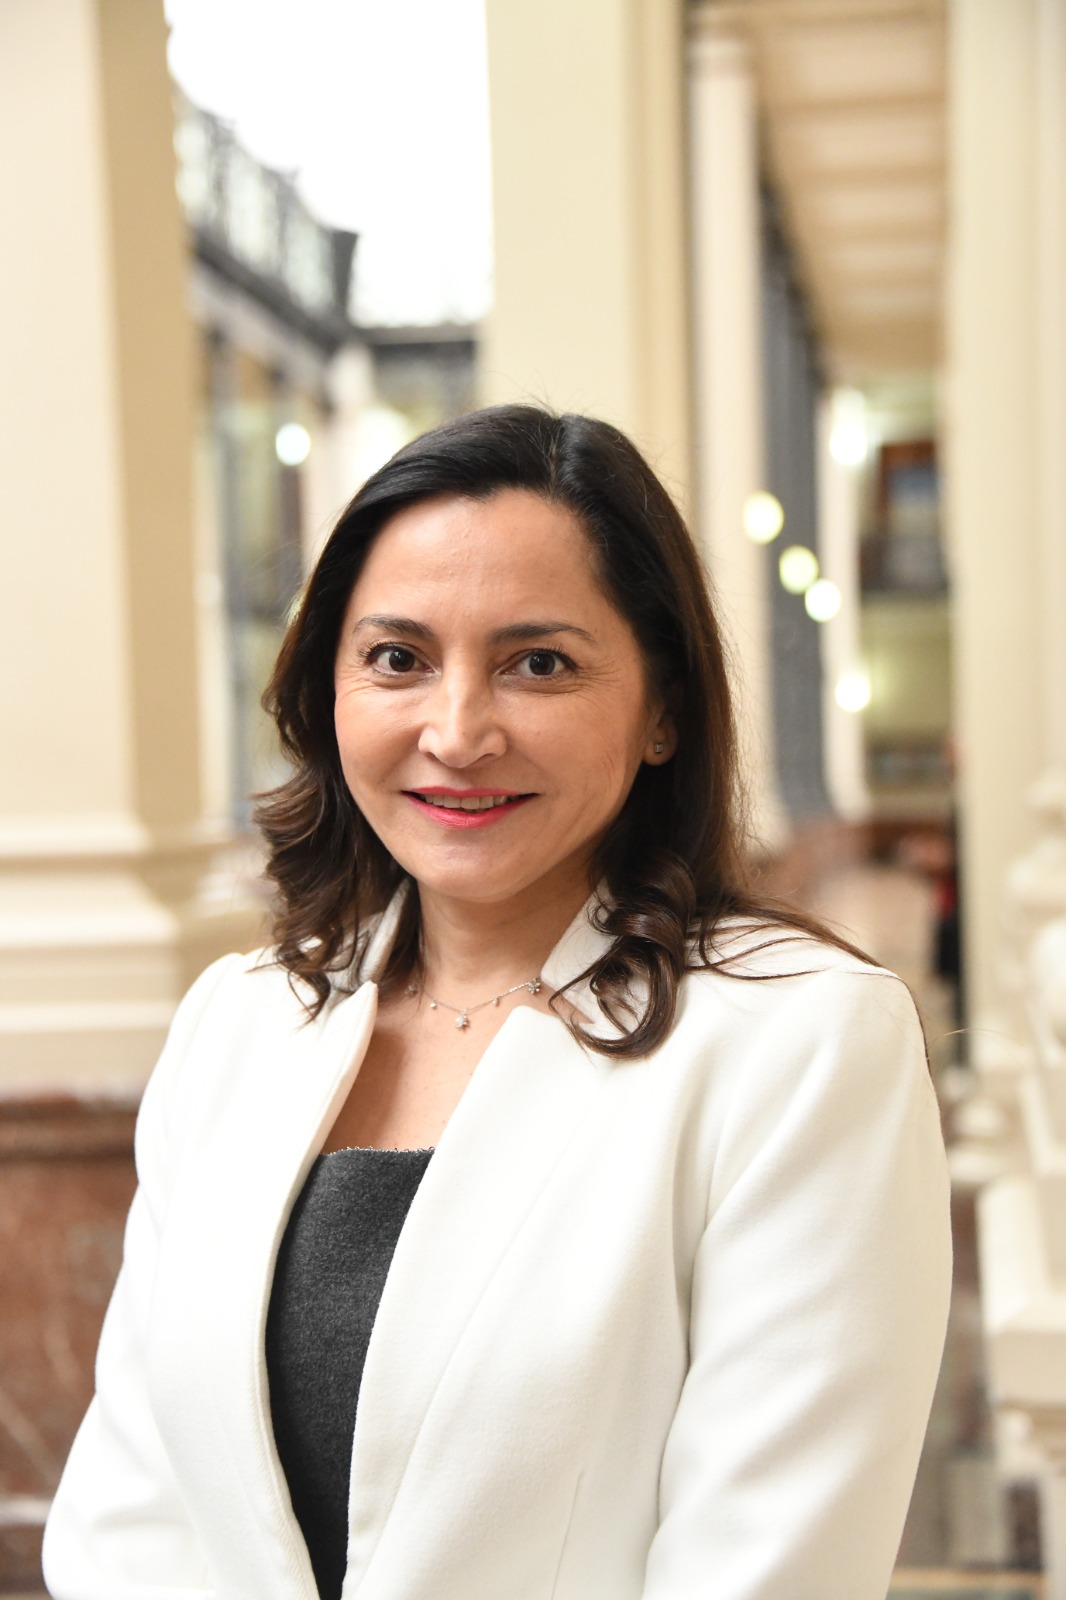 Abogada Marcela Godoy juró como ministra titular del Segundo Tribunal Ambiental